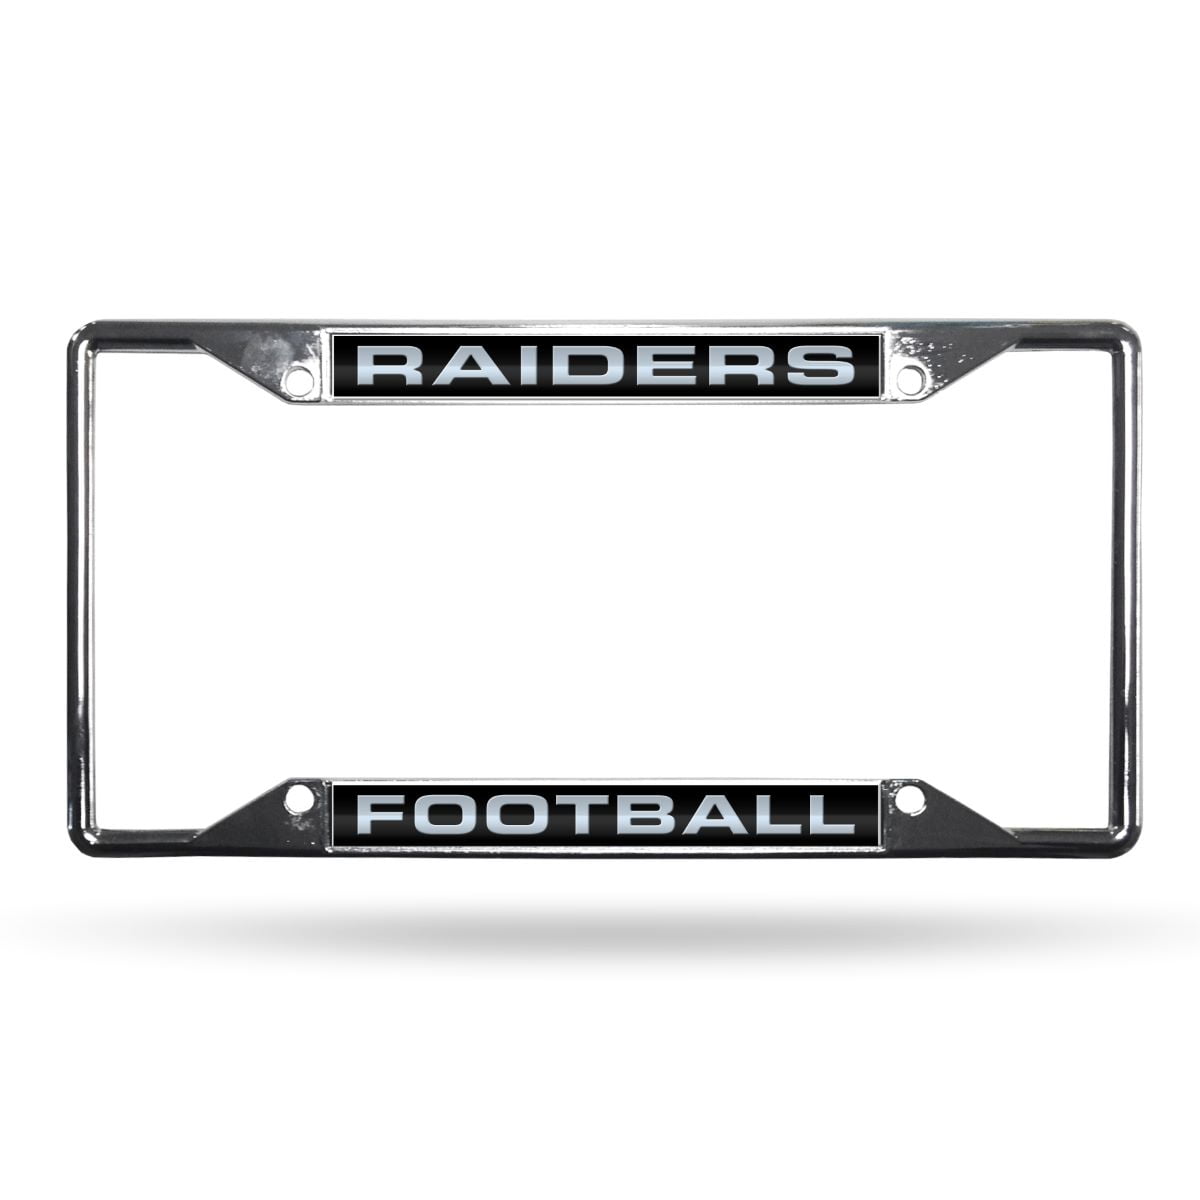 Las Vegas Raiders Metal License Plate Frame EZView Carbon Fiber Design Tag Cover 